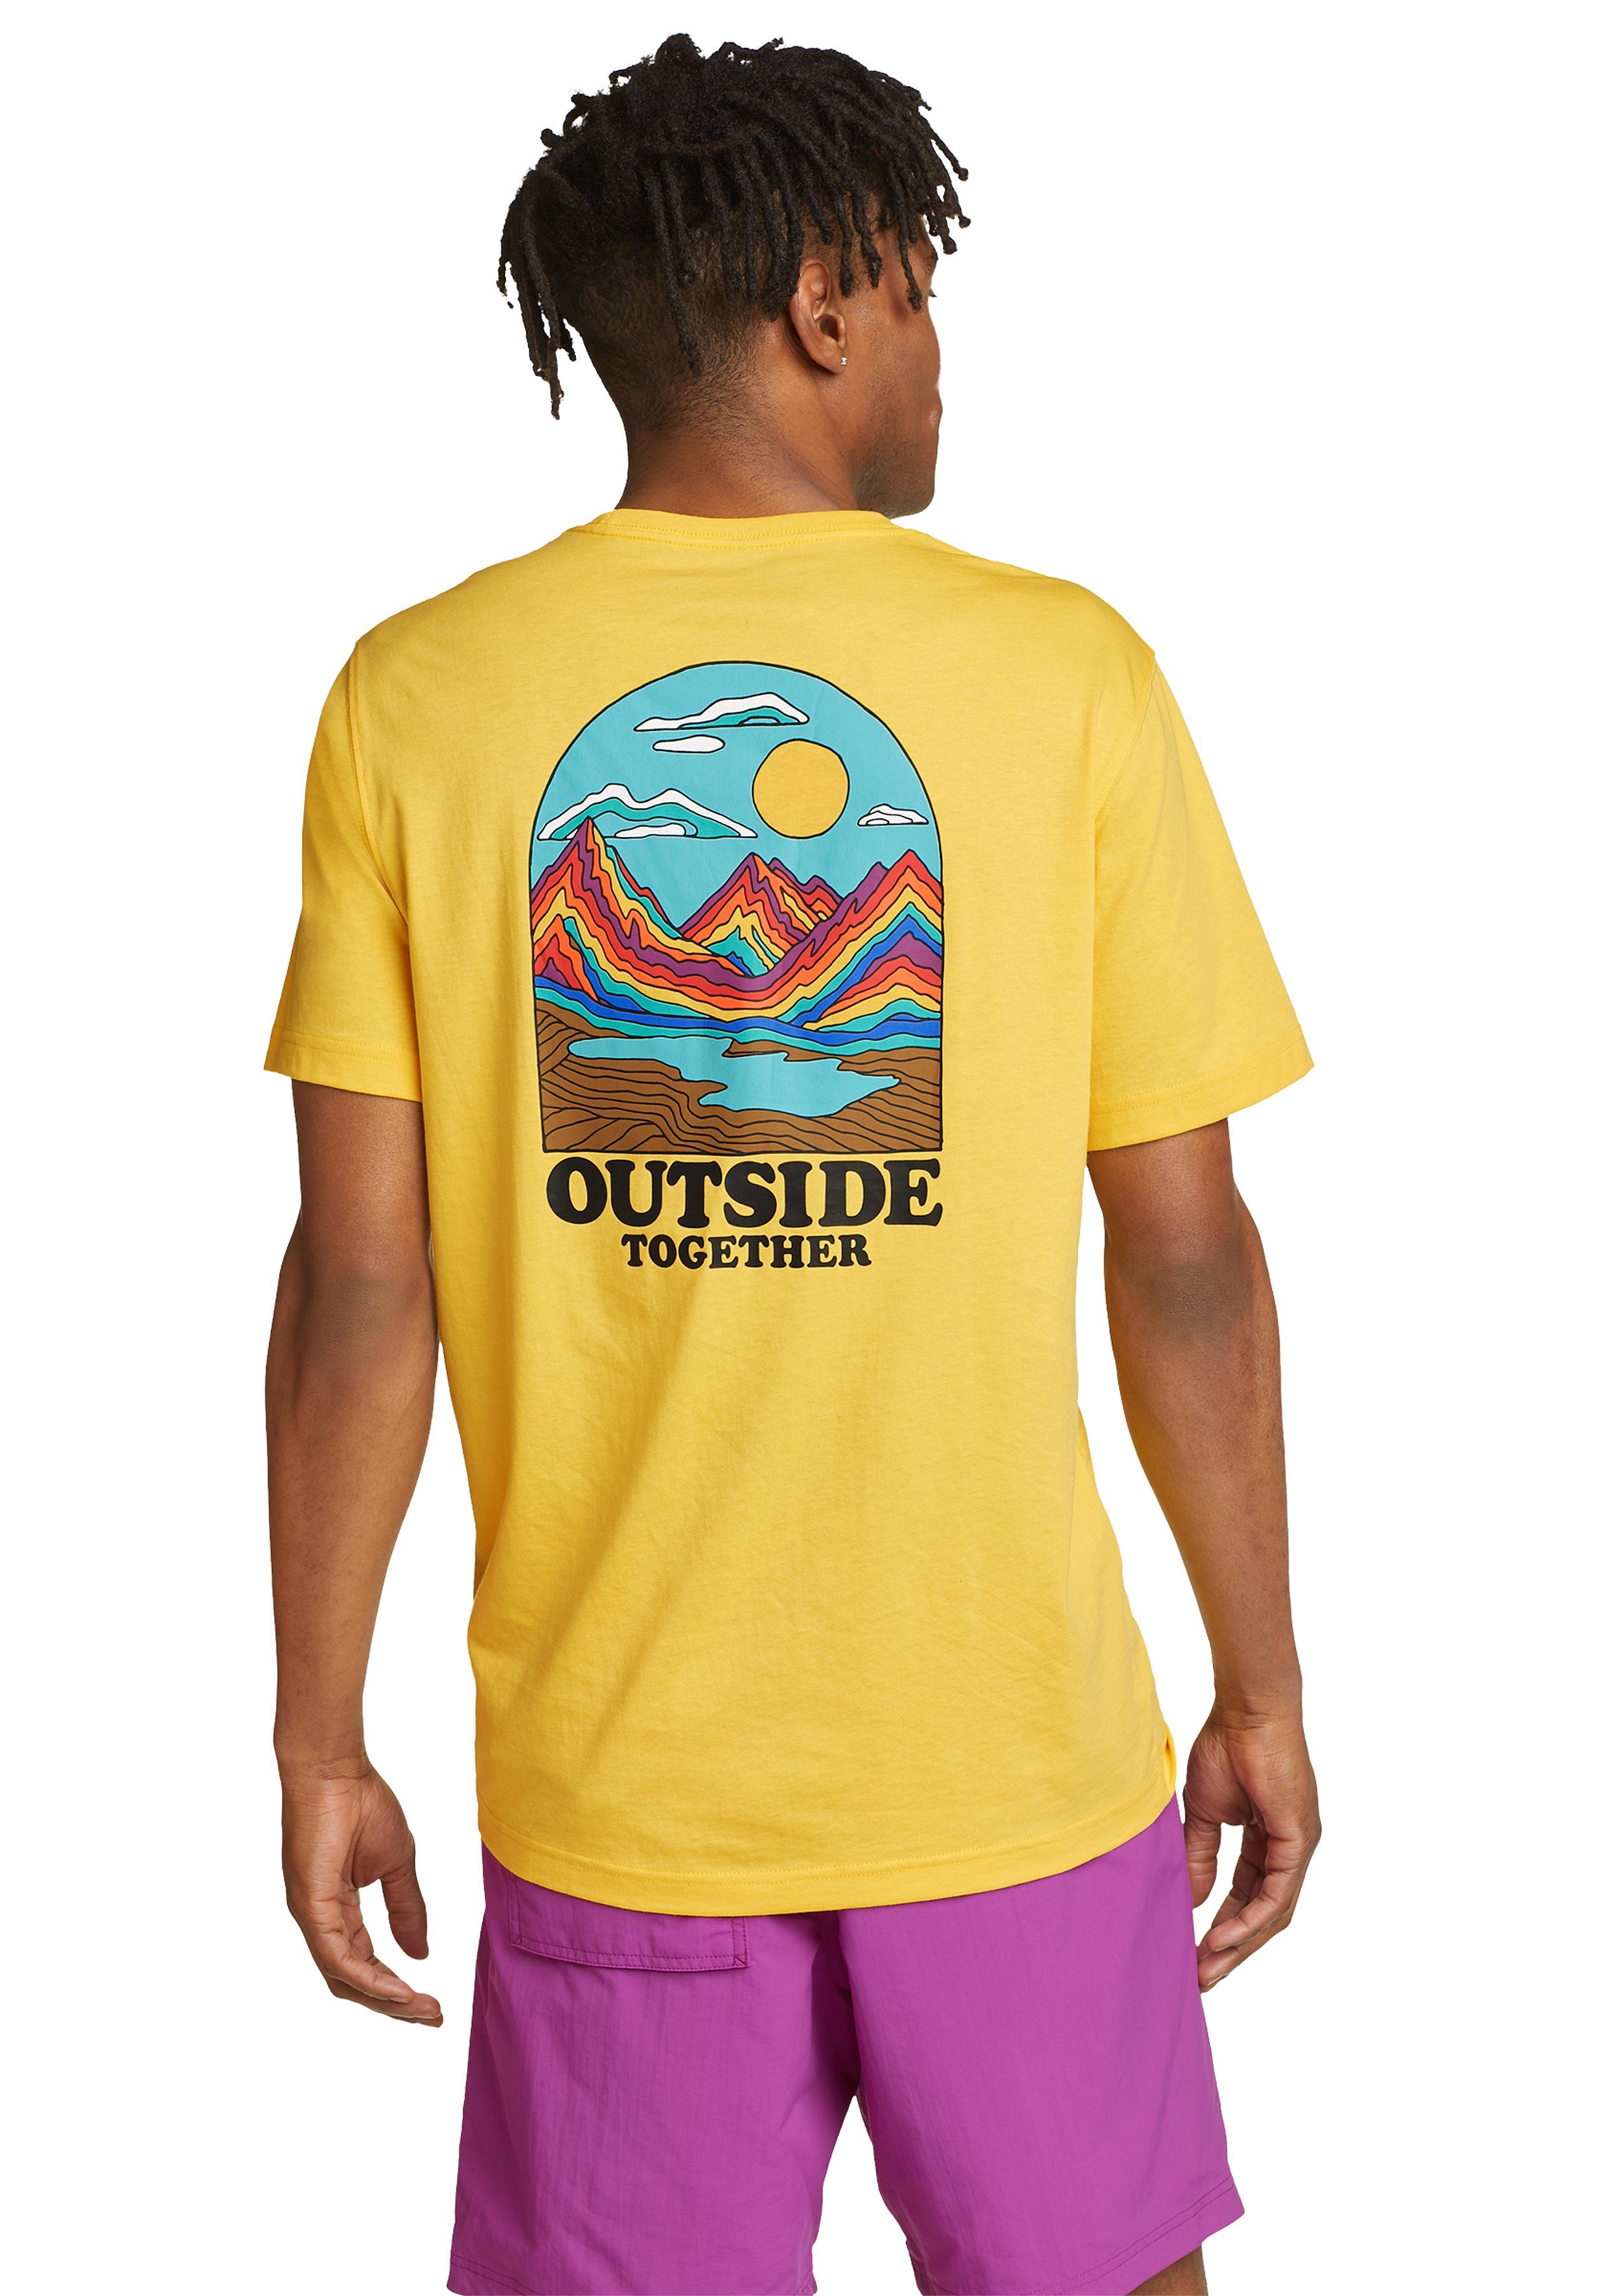 Eddie Bauer T-Shirt T-Shirt Outside together - Graphik